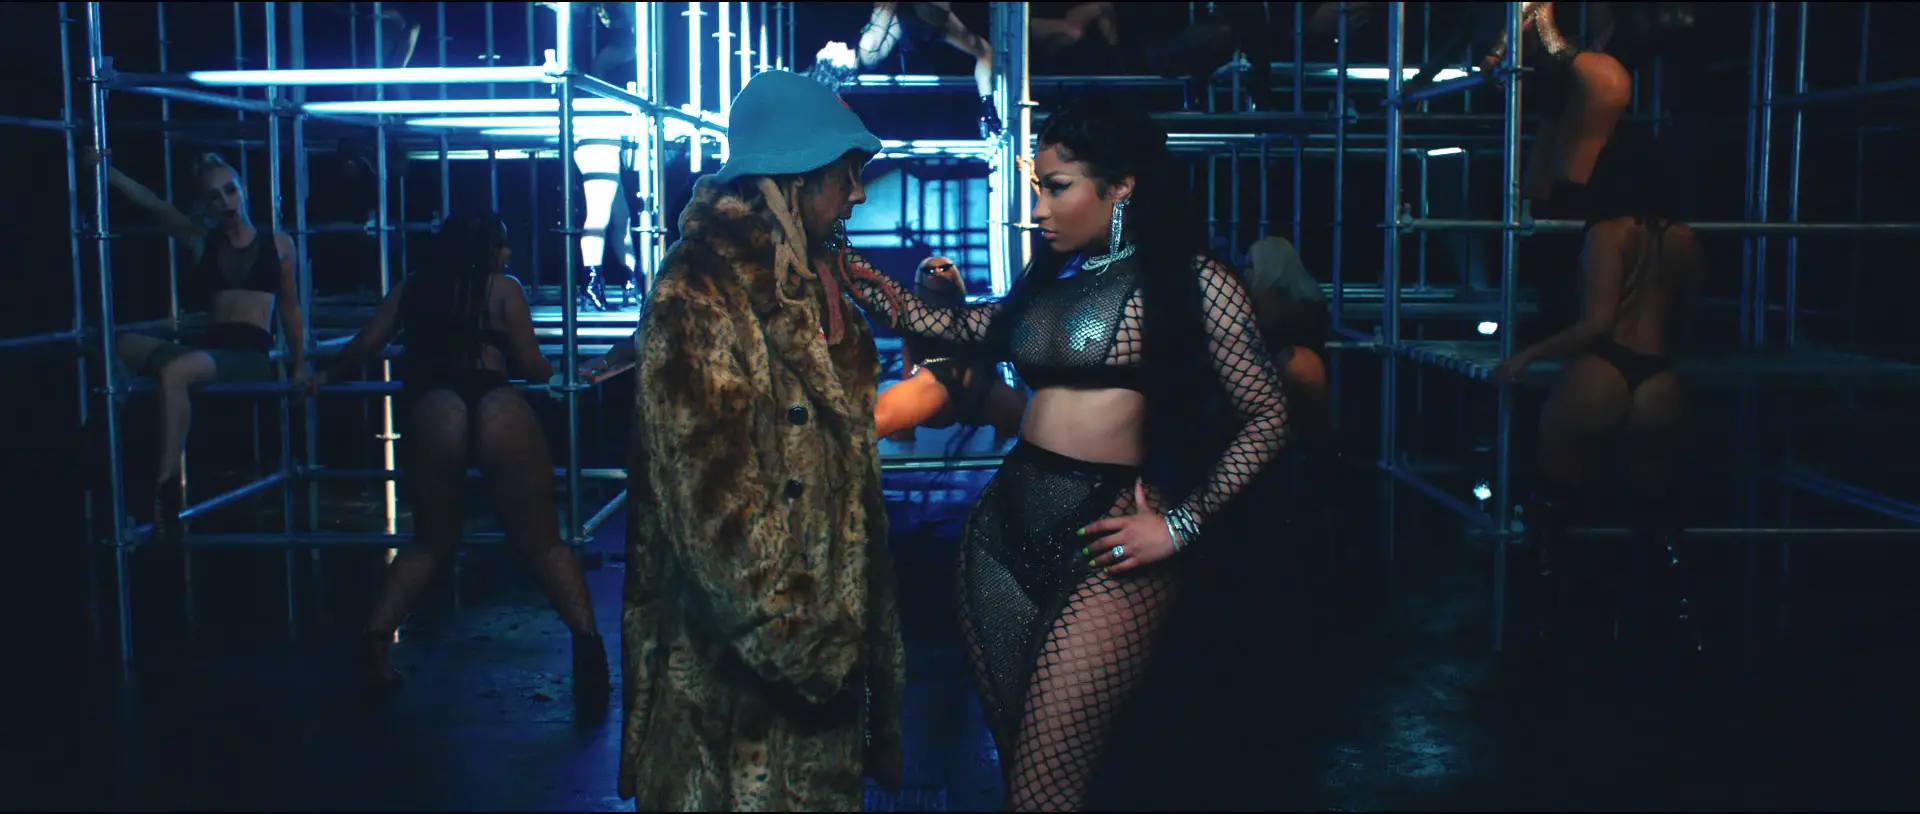 Good Form Nicki Minaj Ft Lil Wayne Download MadDownloadcom.